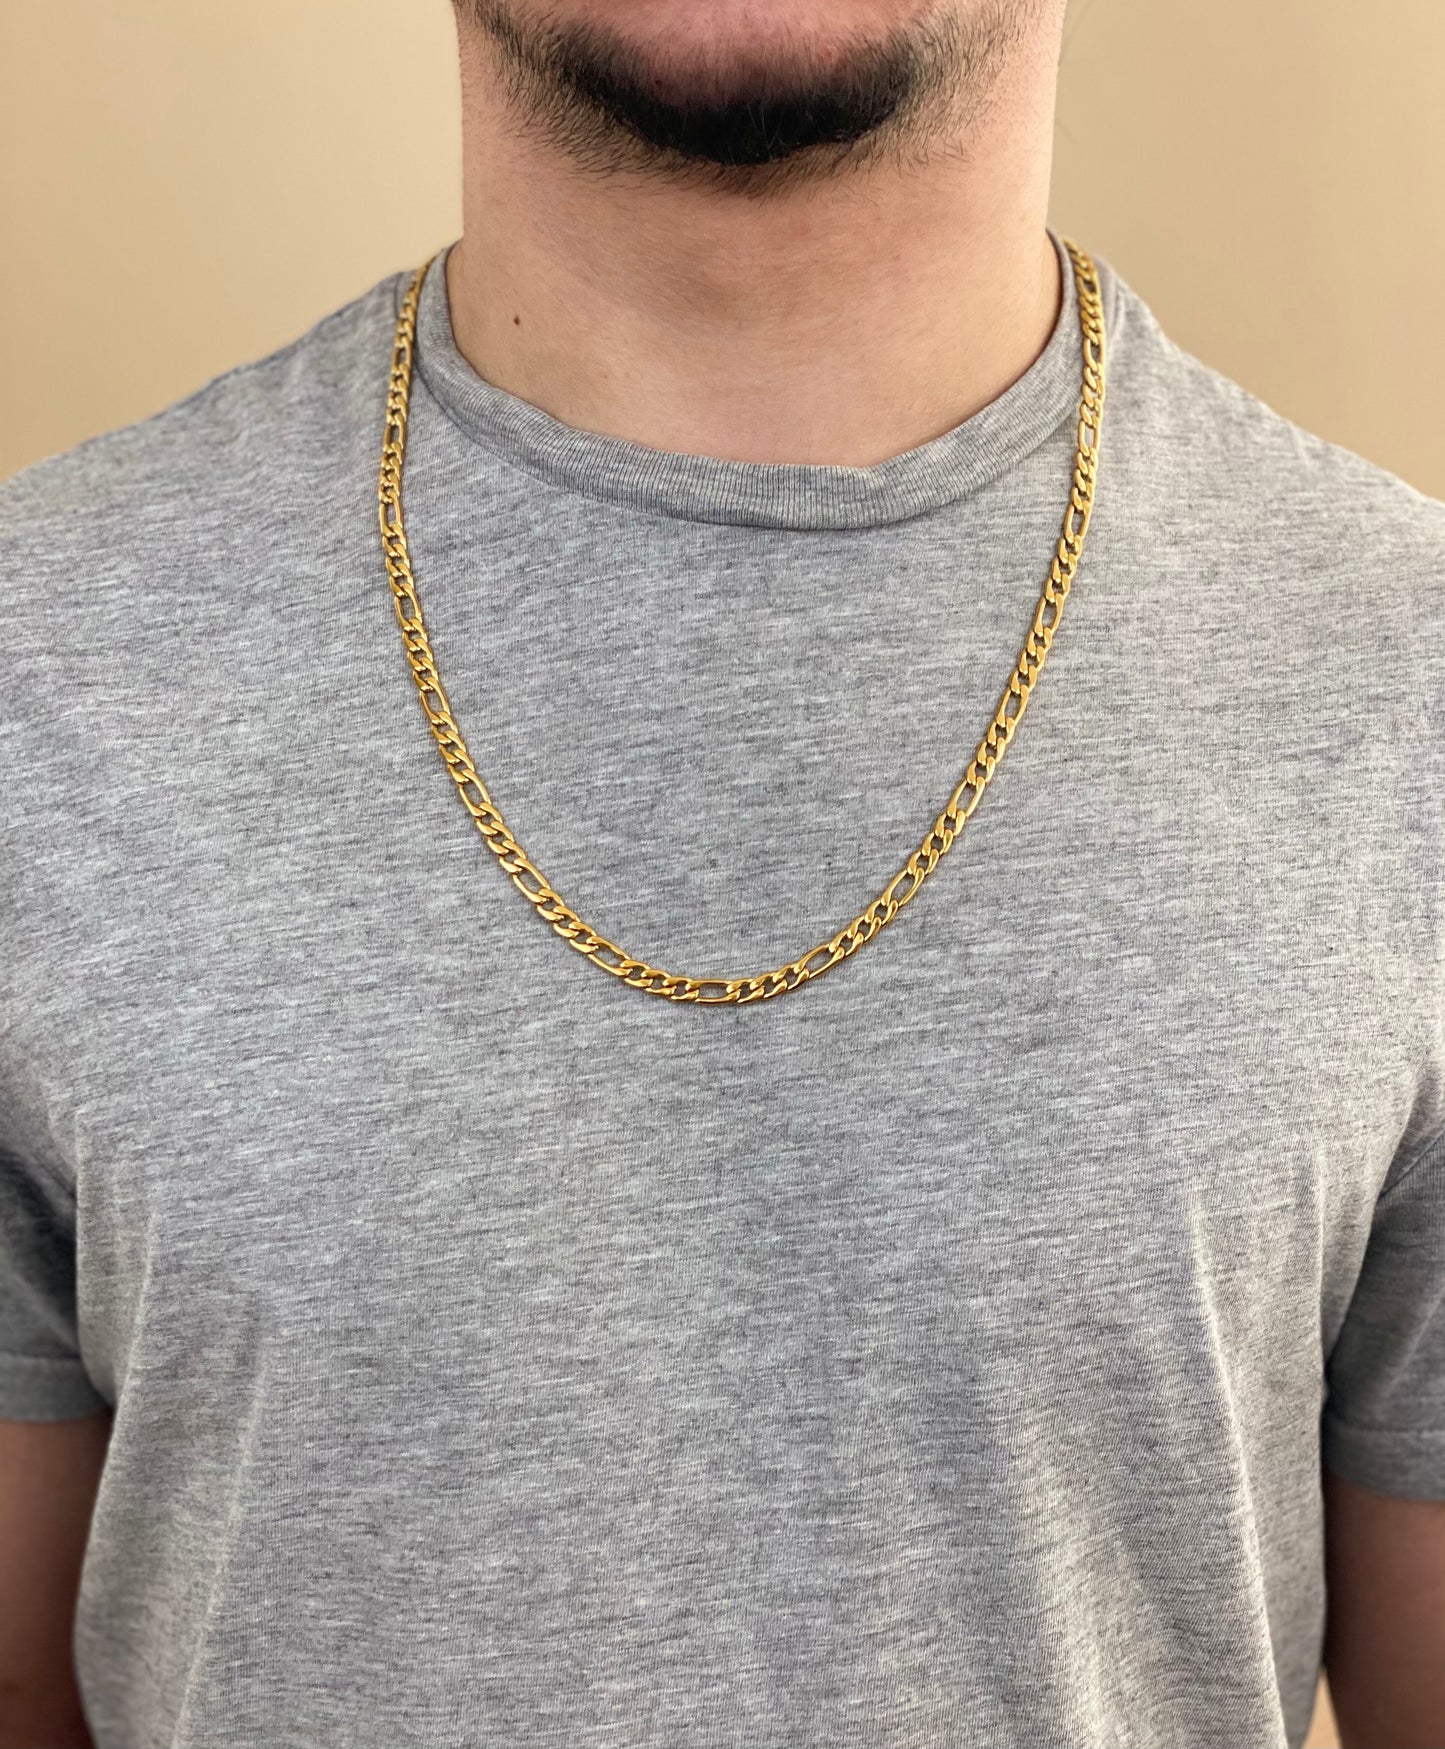 Men's 14k Solid Yellow Gold Figaro Chain Necklace - Gold chain, figaro  chains, real Gold chain (23